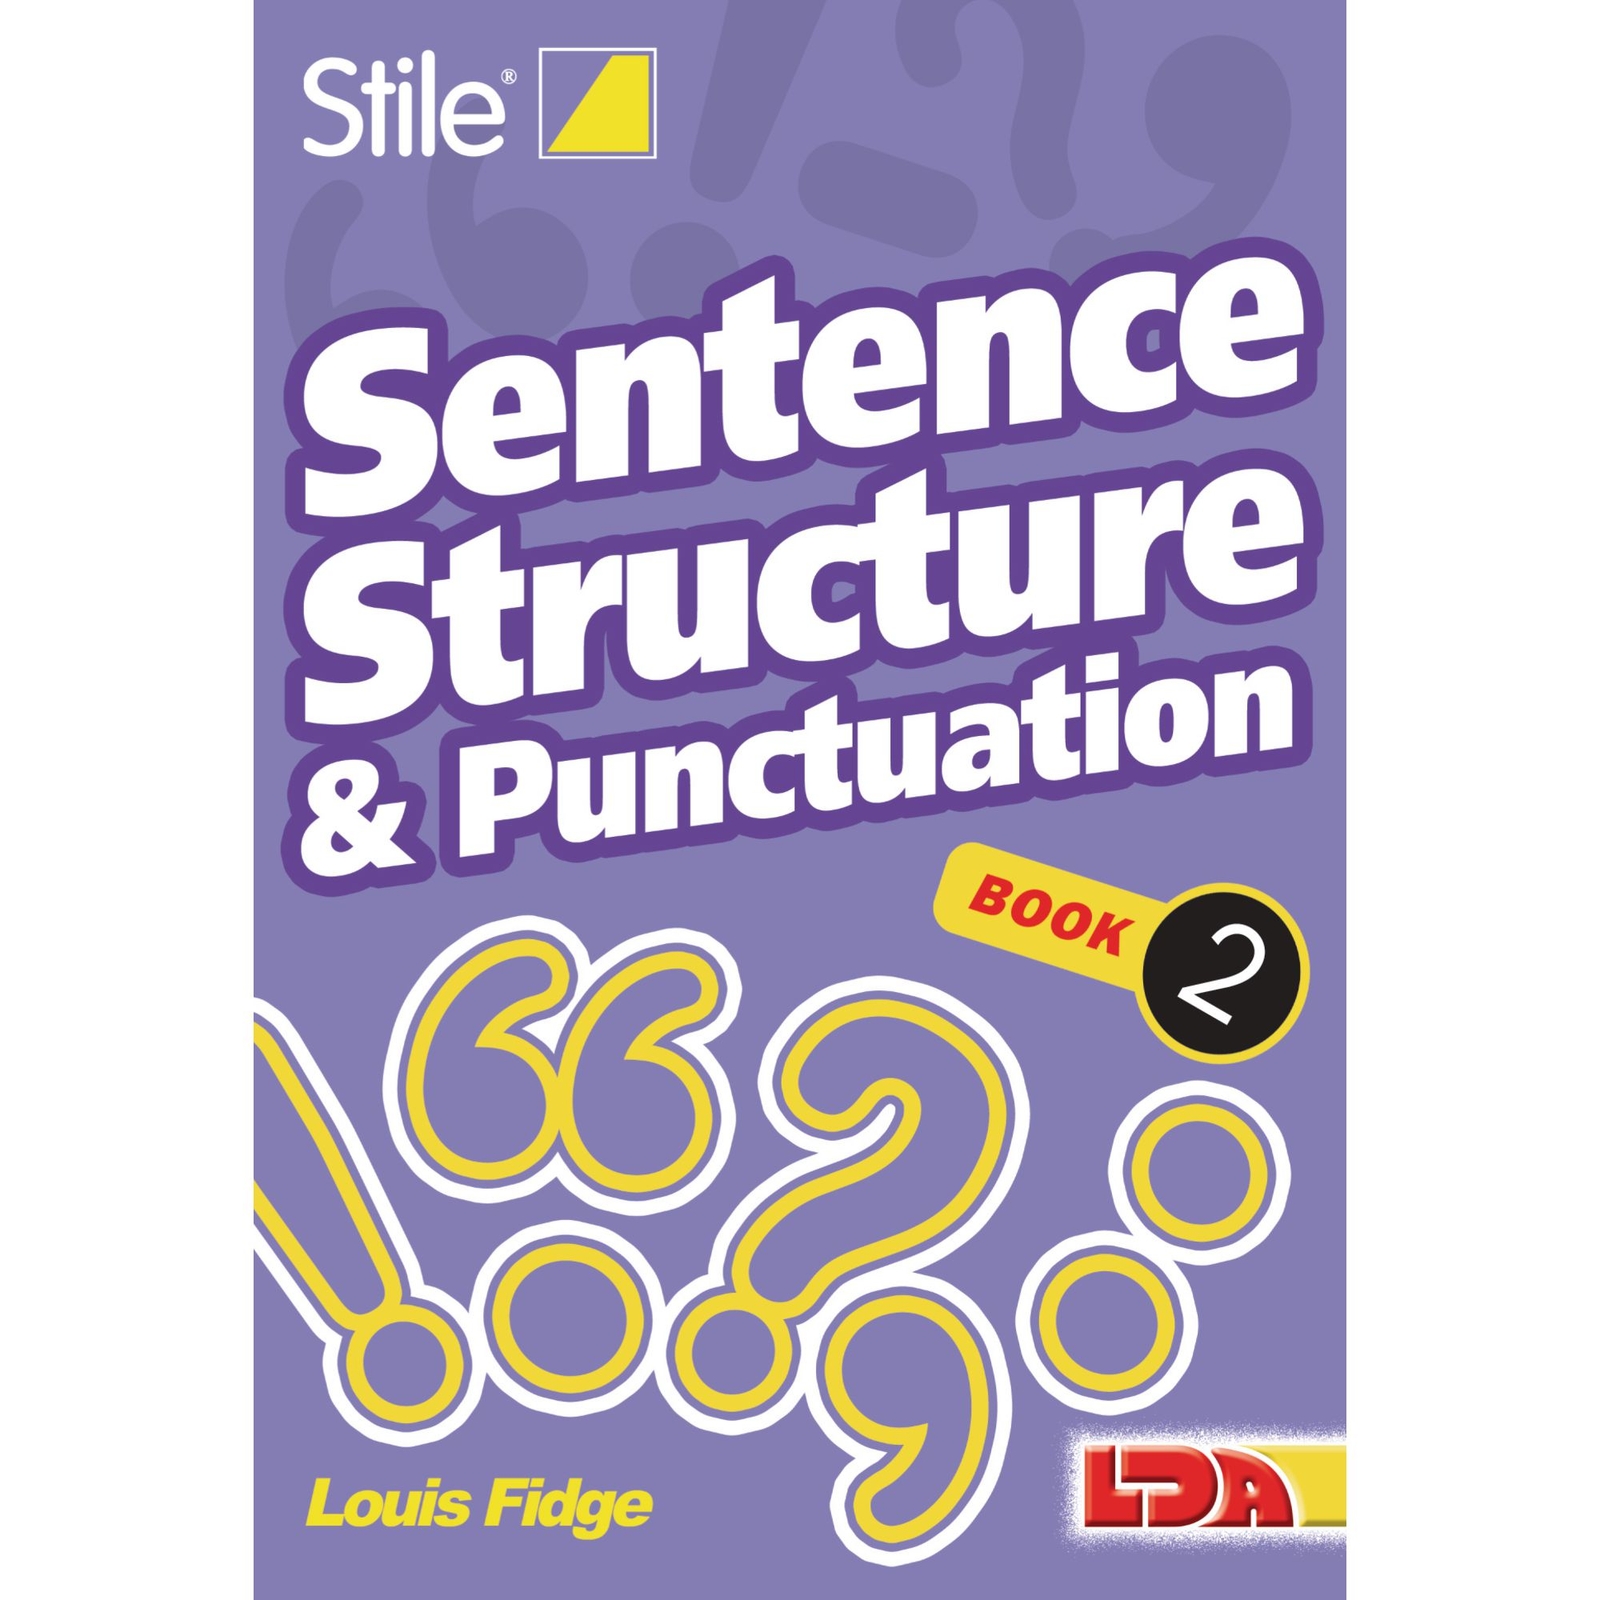 Stile Sentence Structure & Punctuation Book 2 - Each